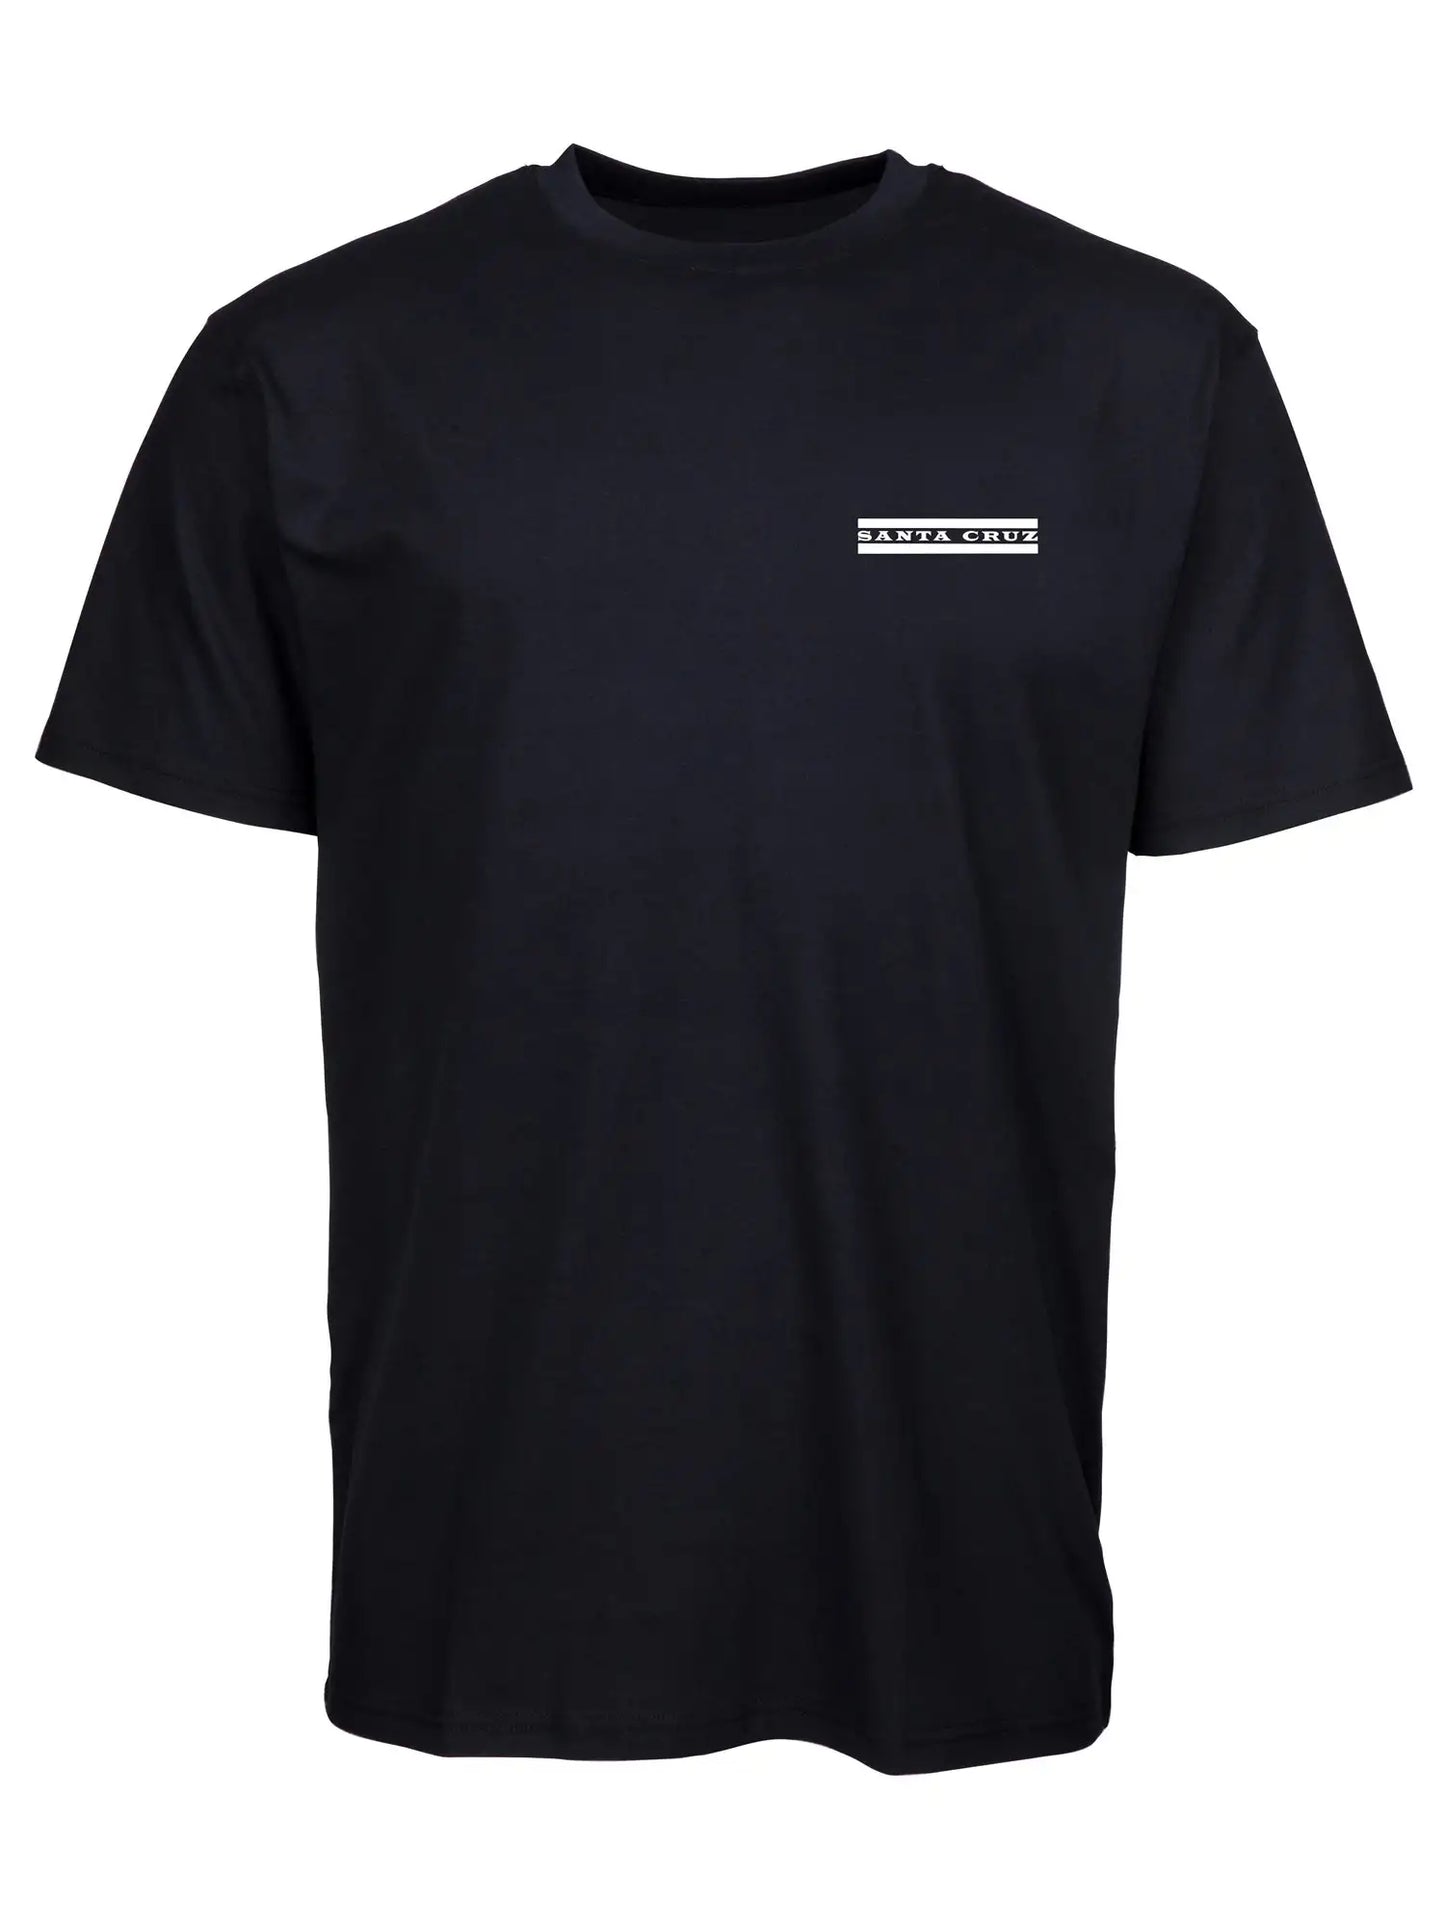 Santa Cruz Dressen Tribal T-Shirt Black